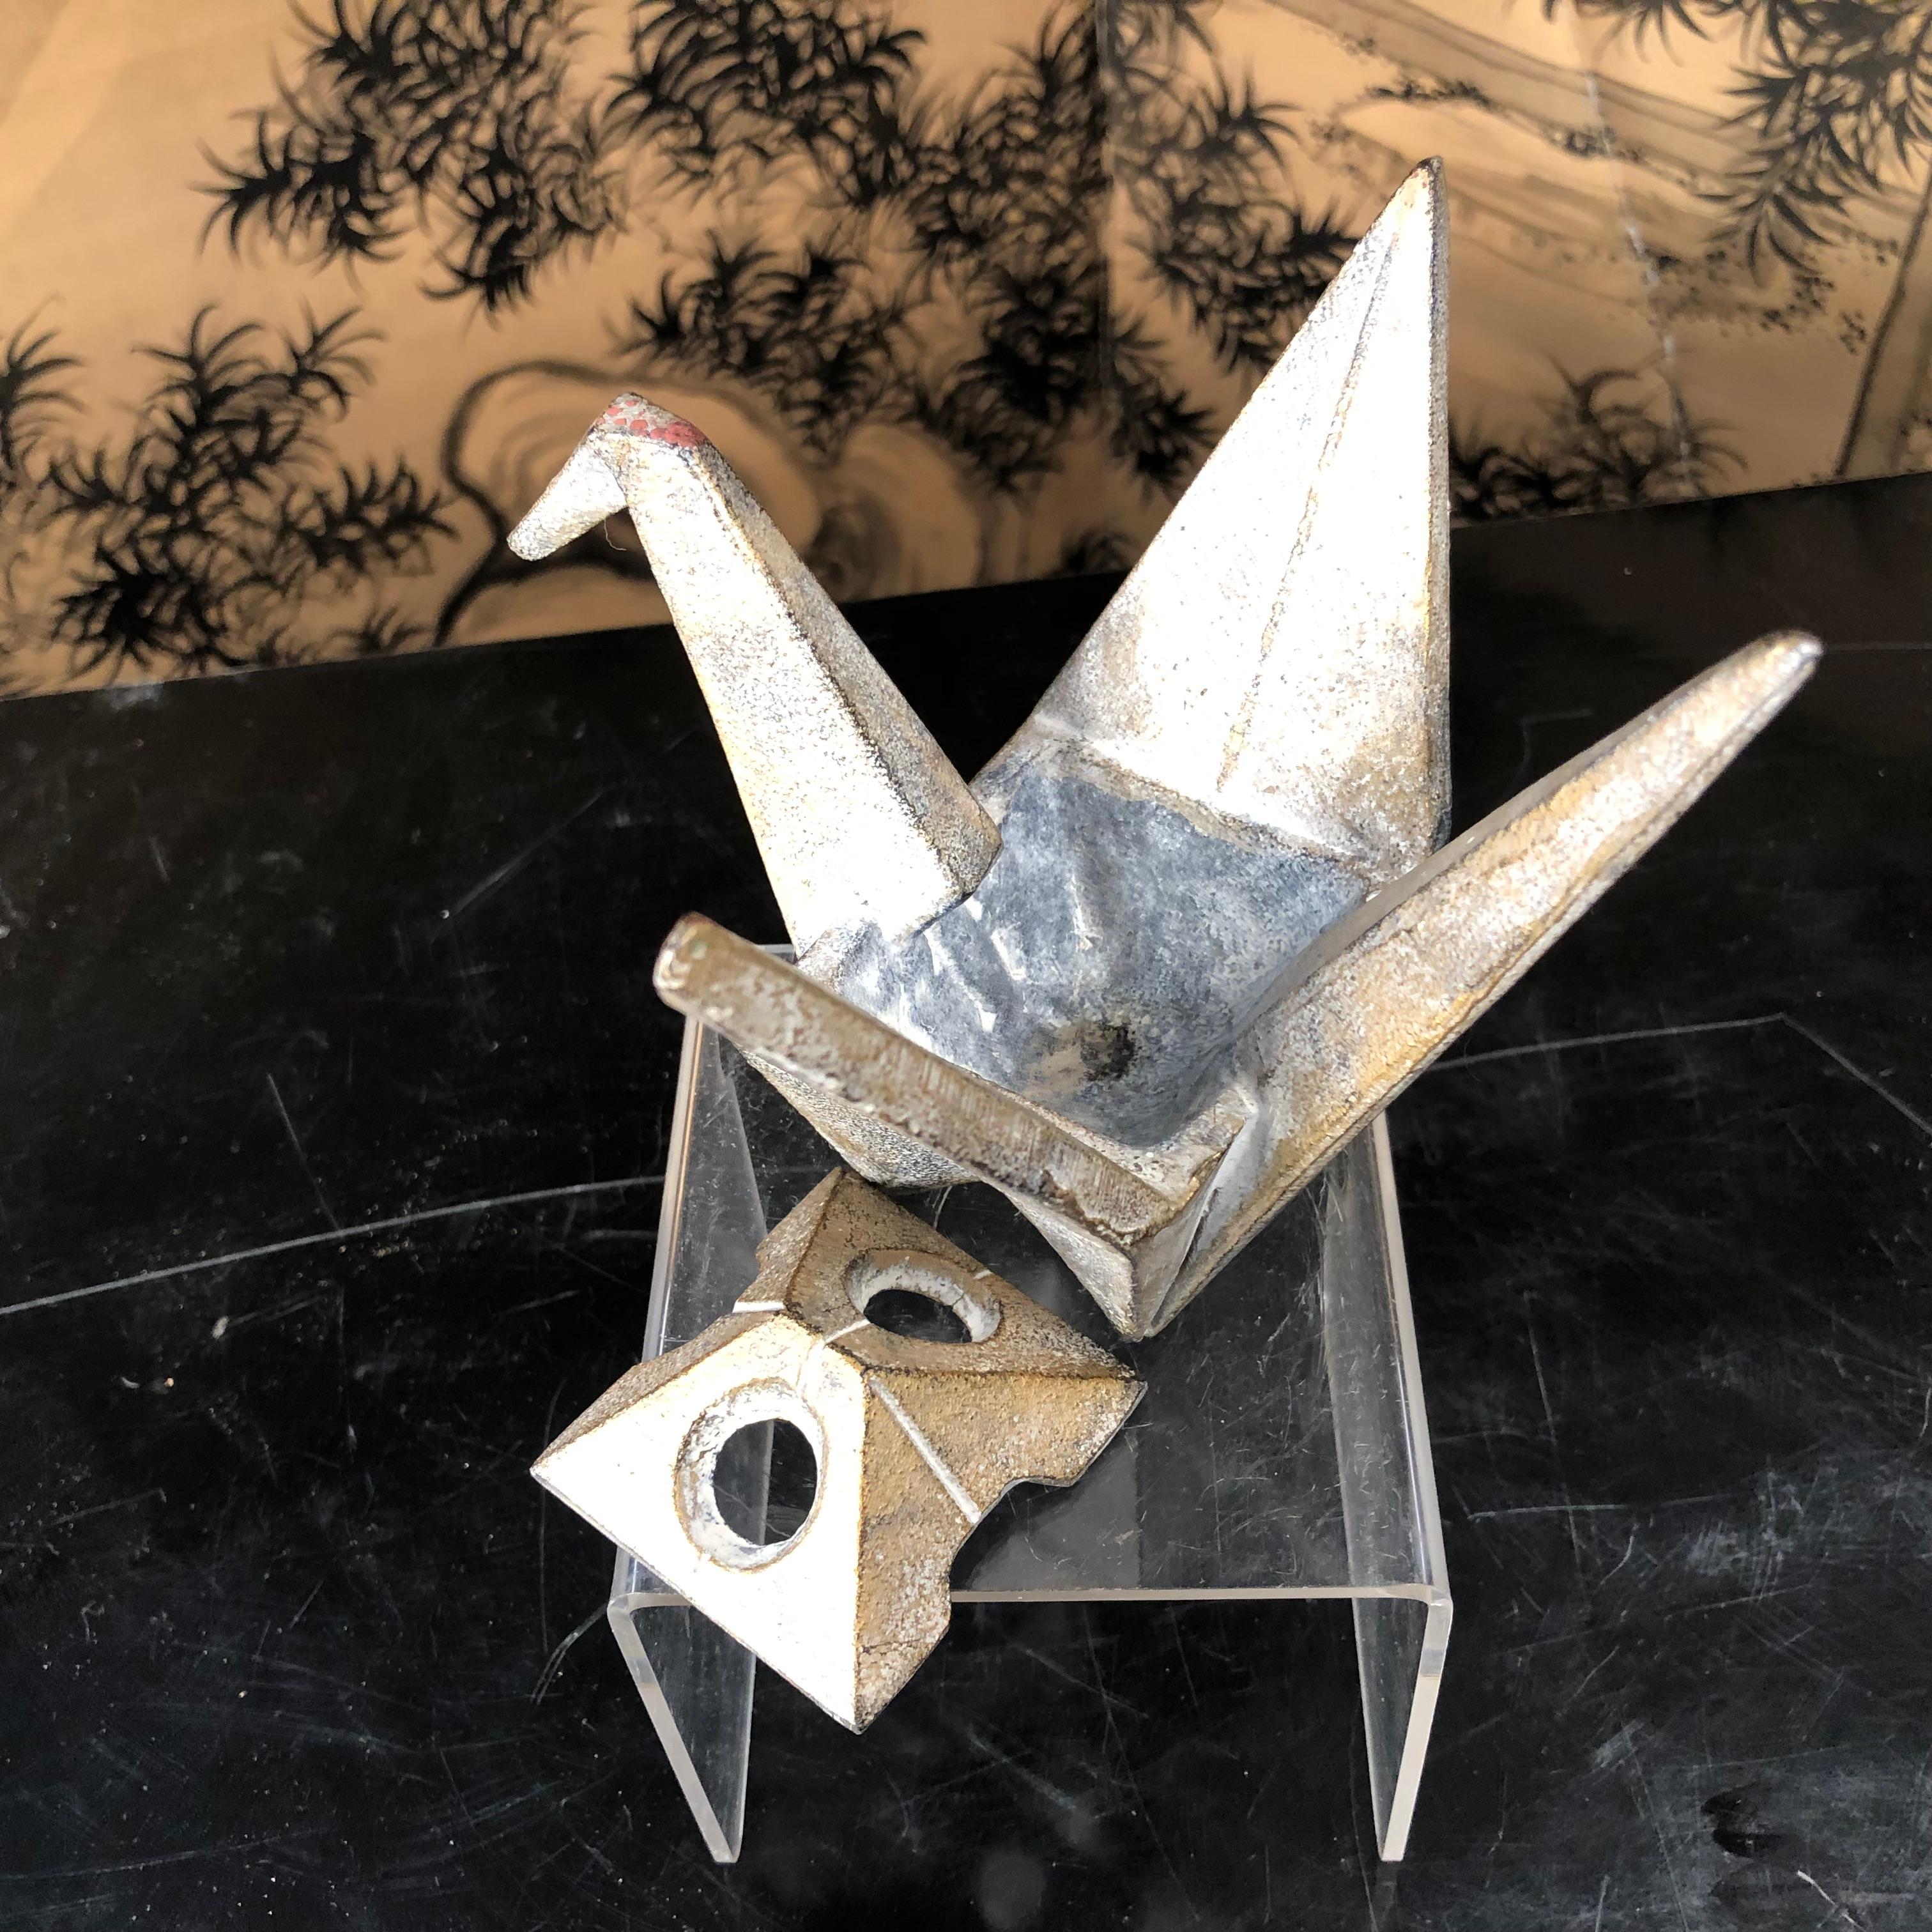 Japanese Origami Crane Sculpture by Famous Artist Sotaro 1